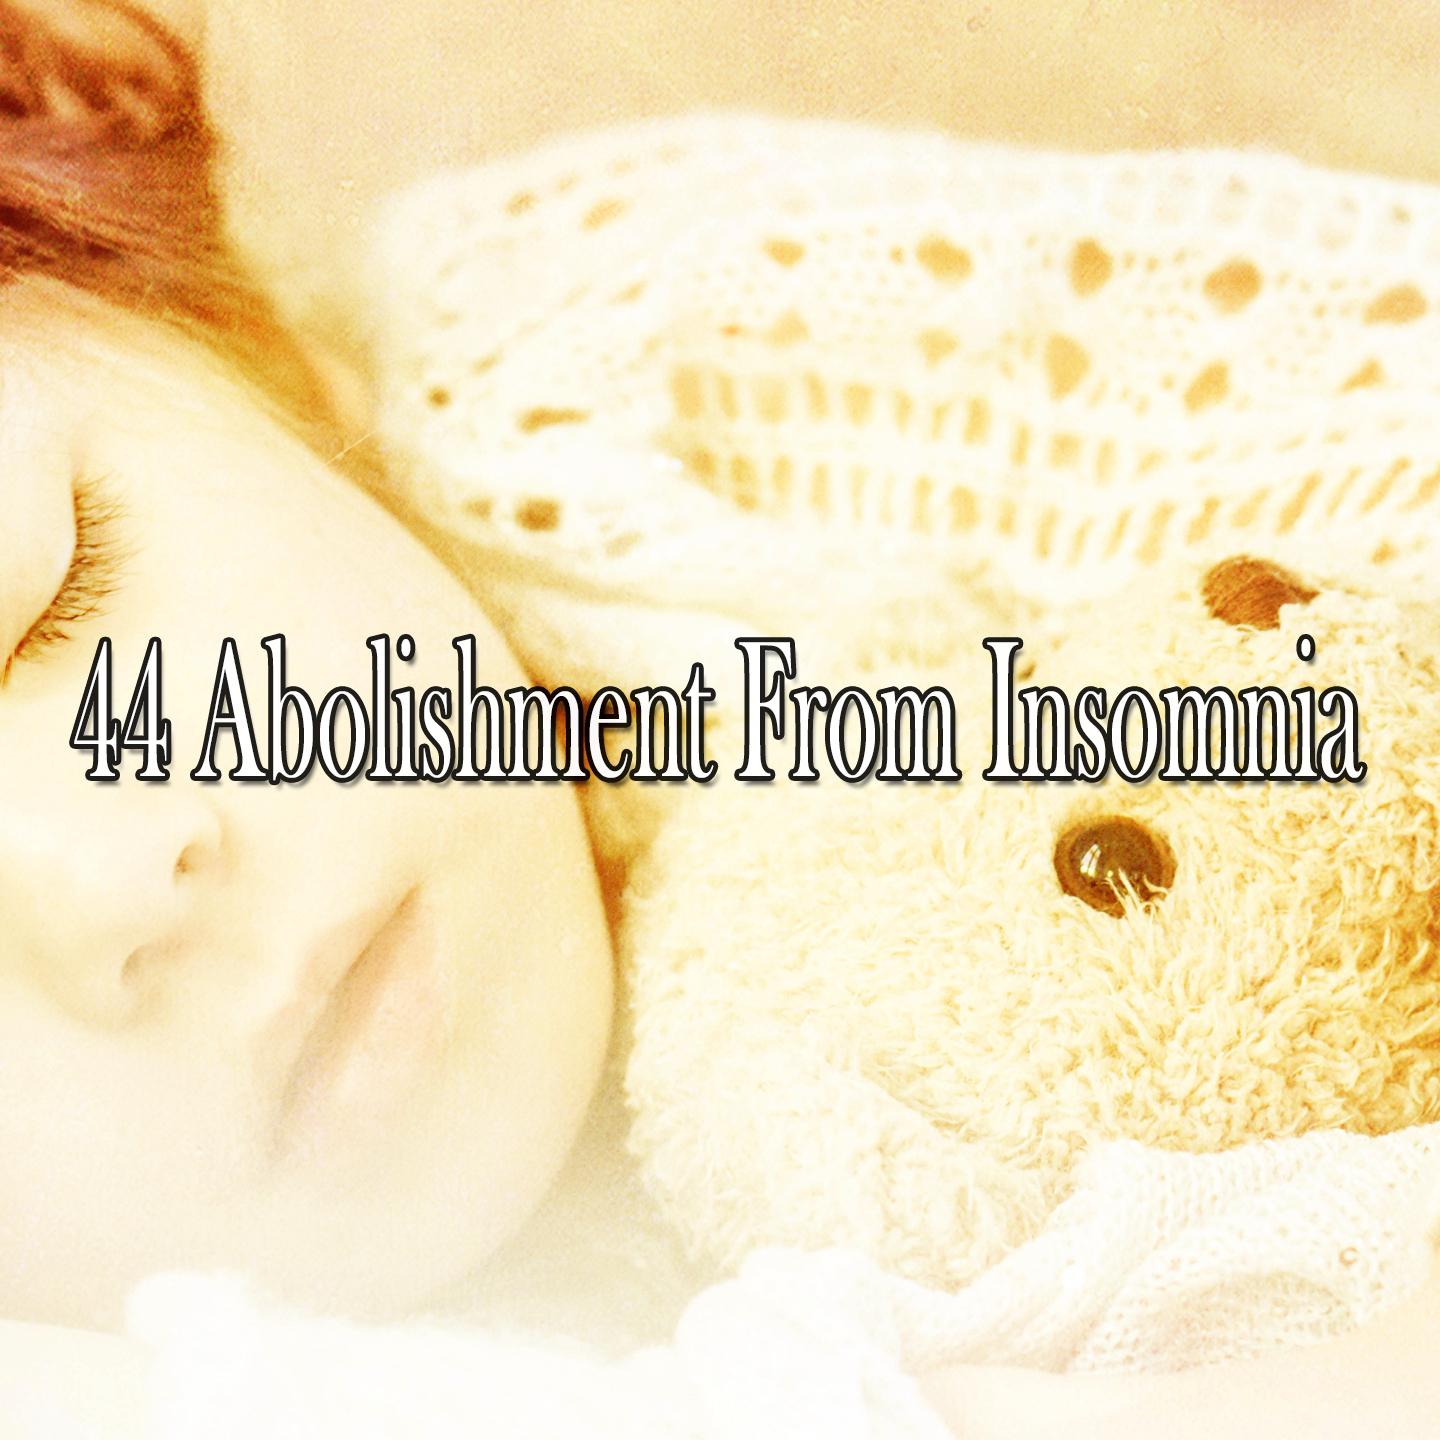 44 Abolishment from Insomnia